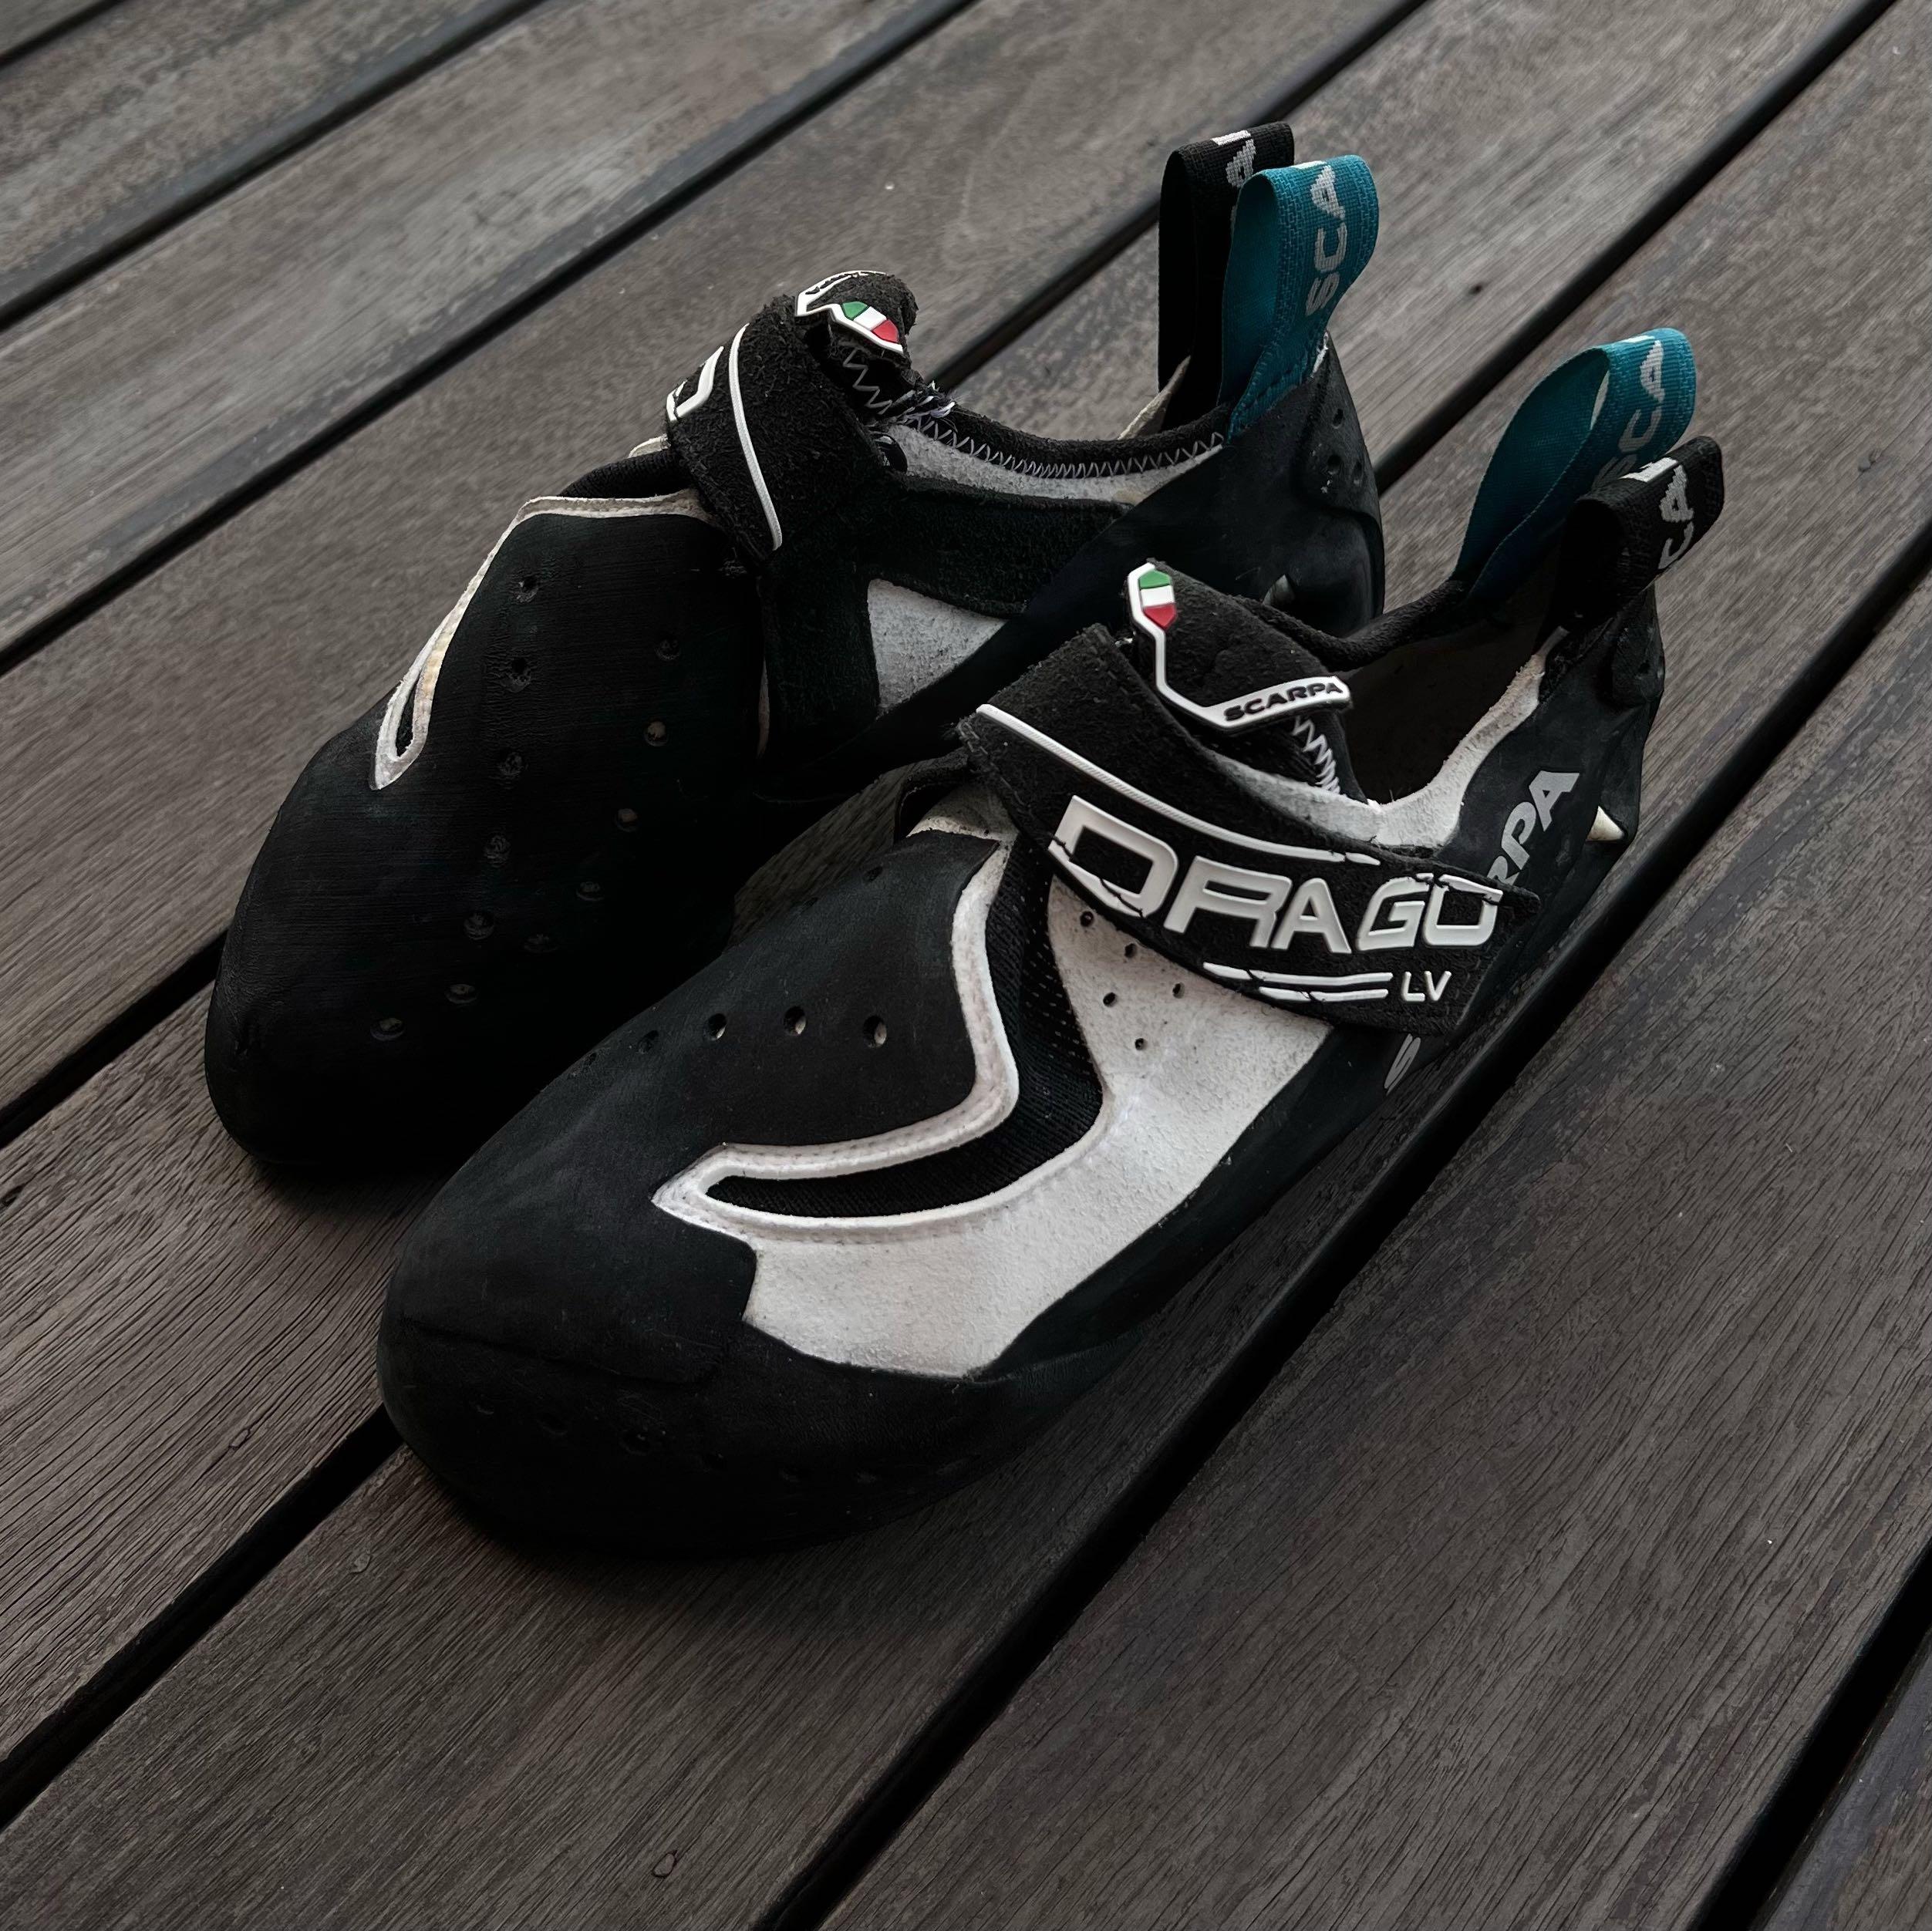 Item 882098 - Scarpa Drago LV - Climbing Shoes - Size 40.5